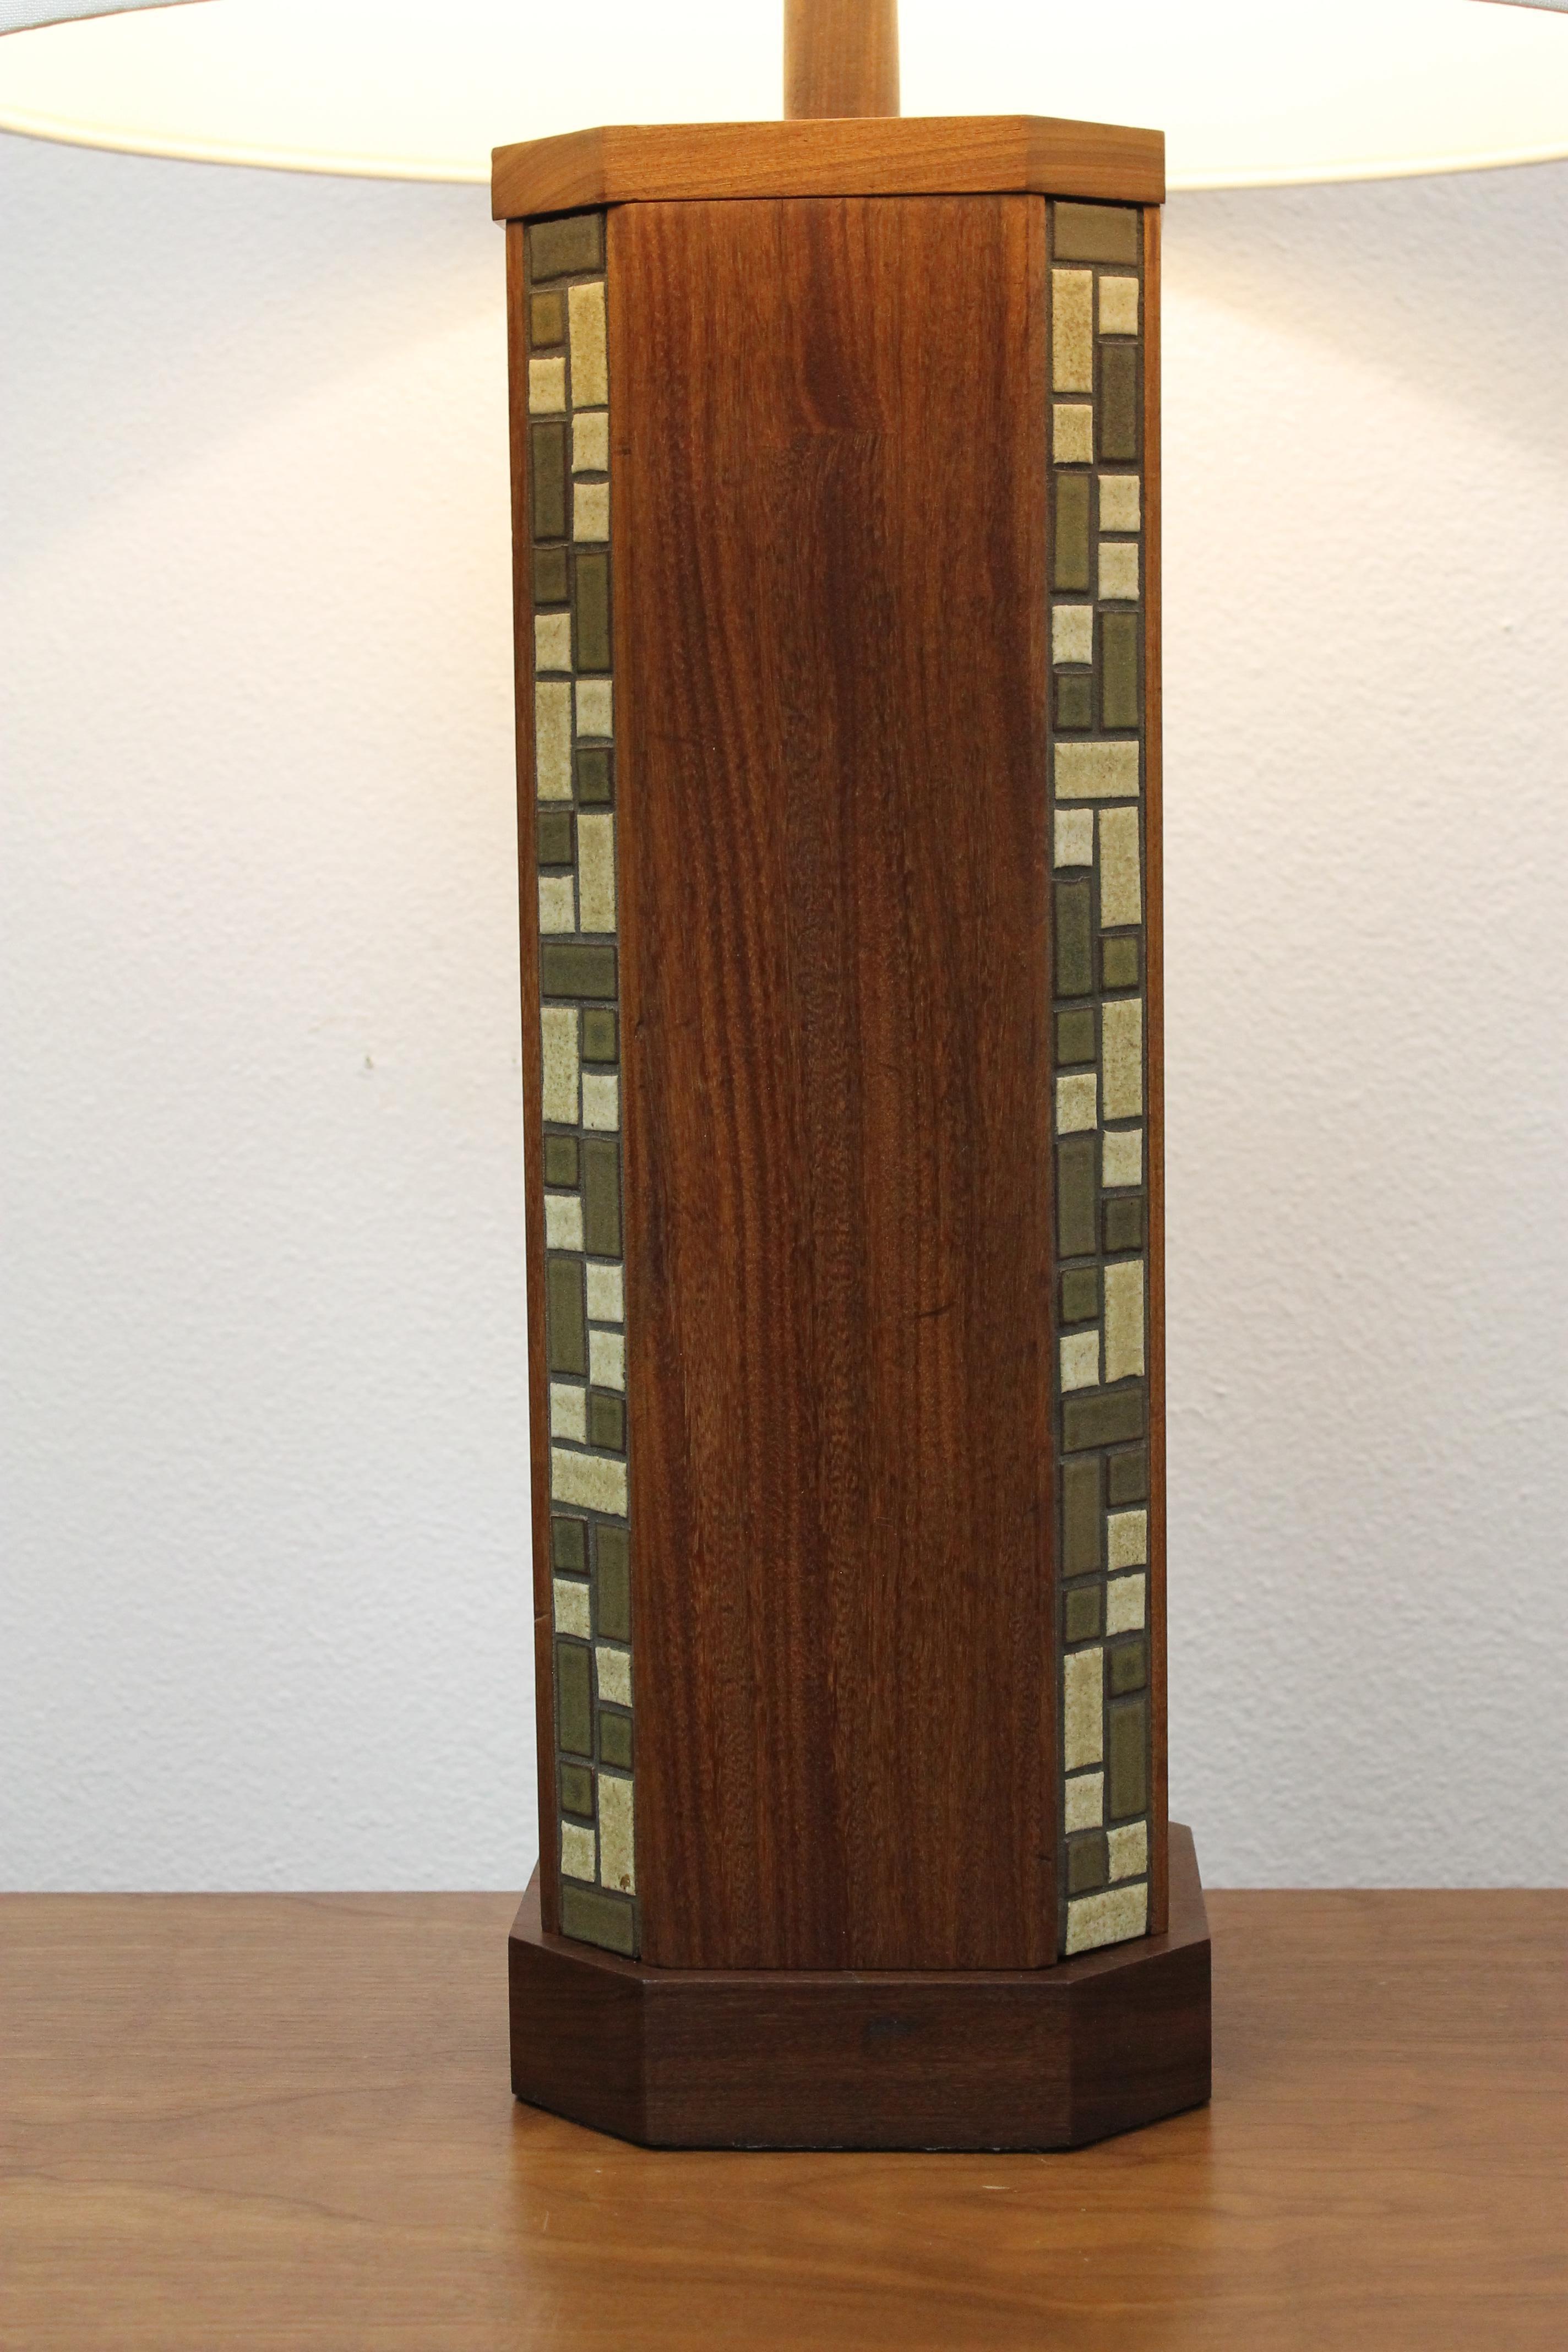 Martz table lamp by Marshall Studios, Inc. Veedersburg, Indiana. Lamp has 4 bands of ceramic tiles. Lamp is 7” wide, 7